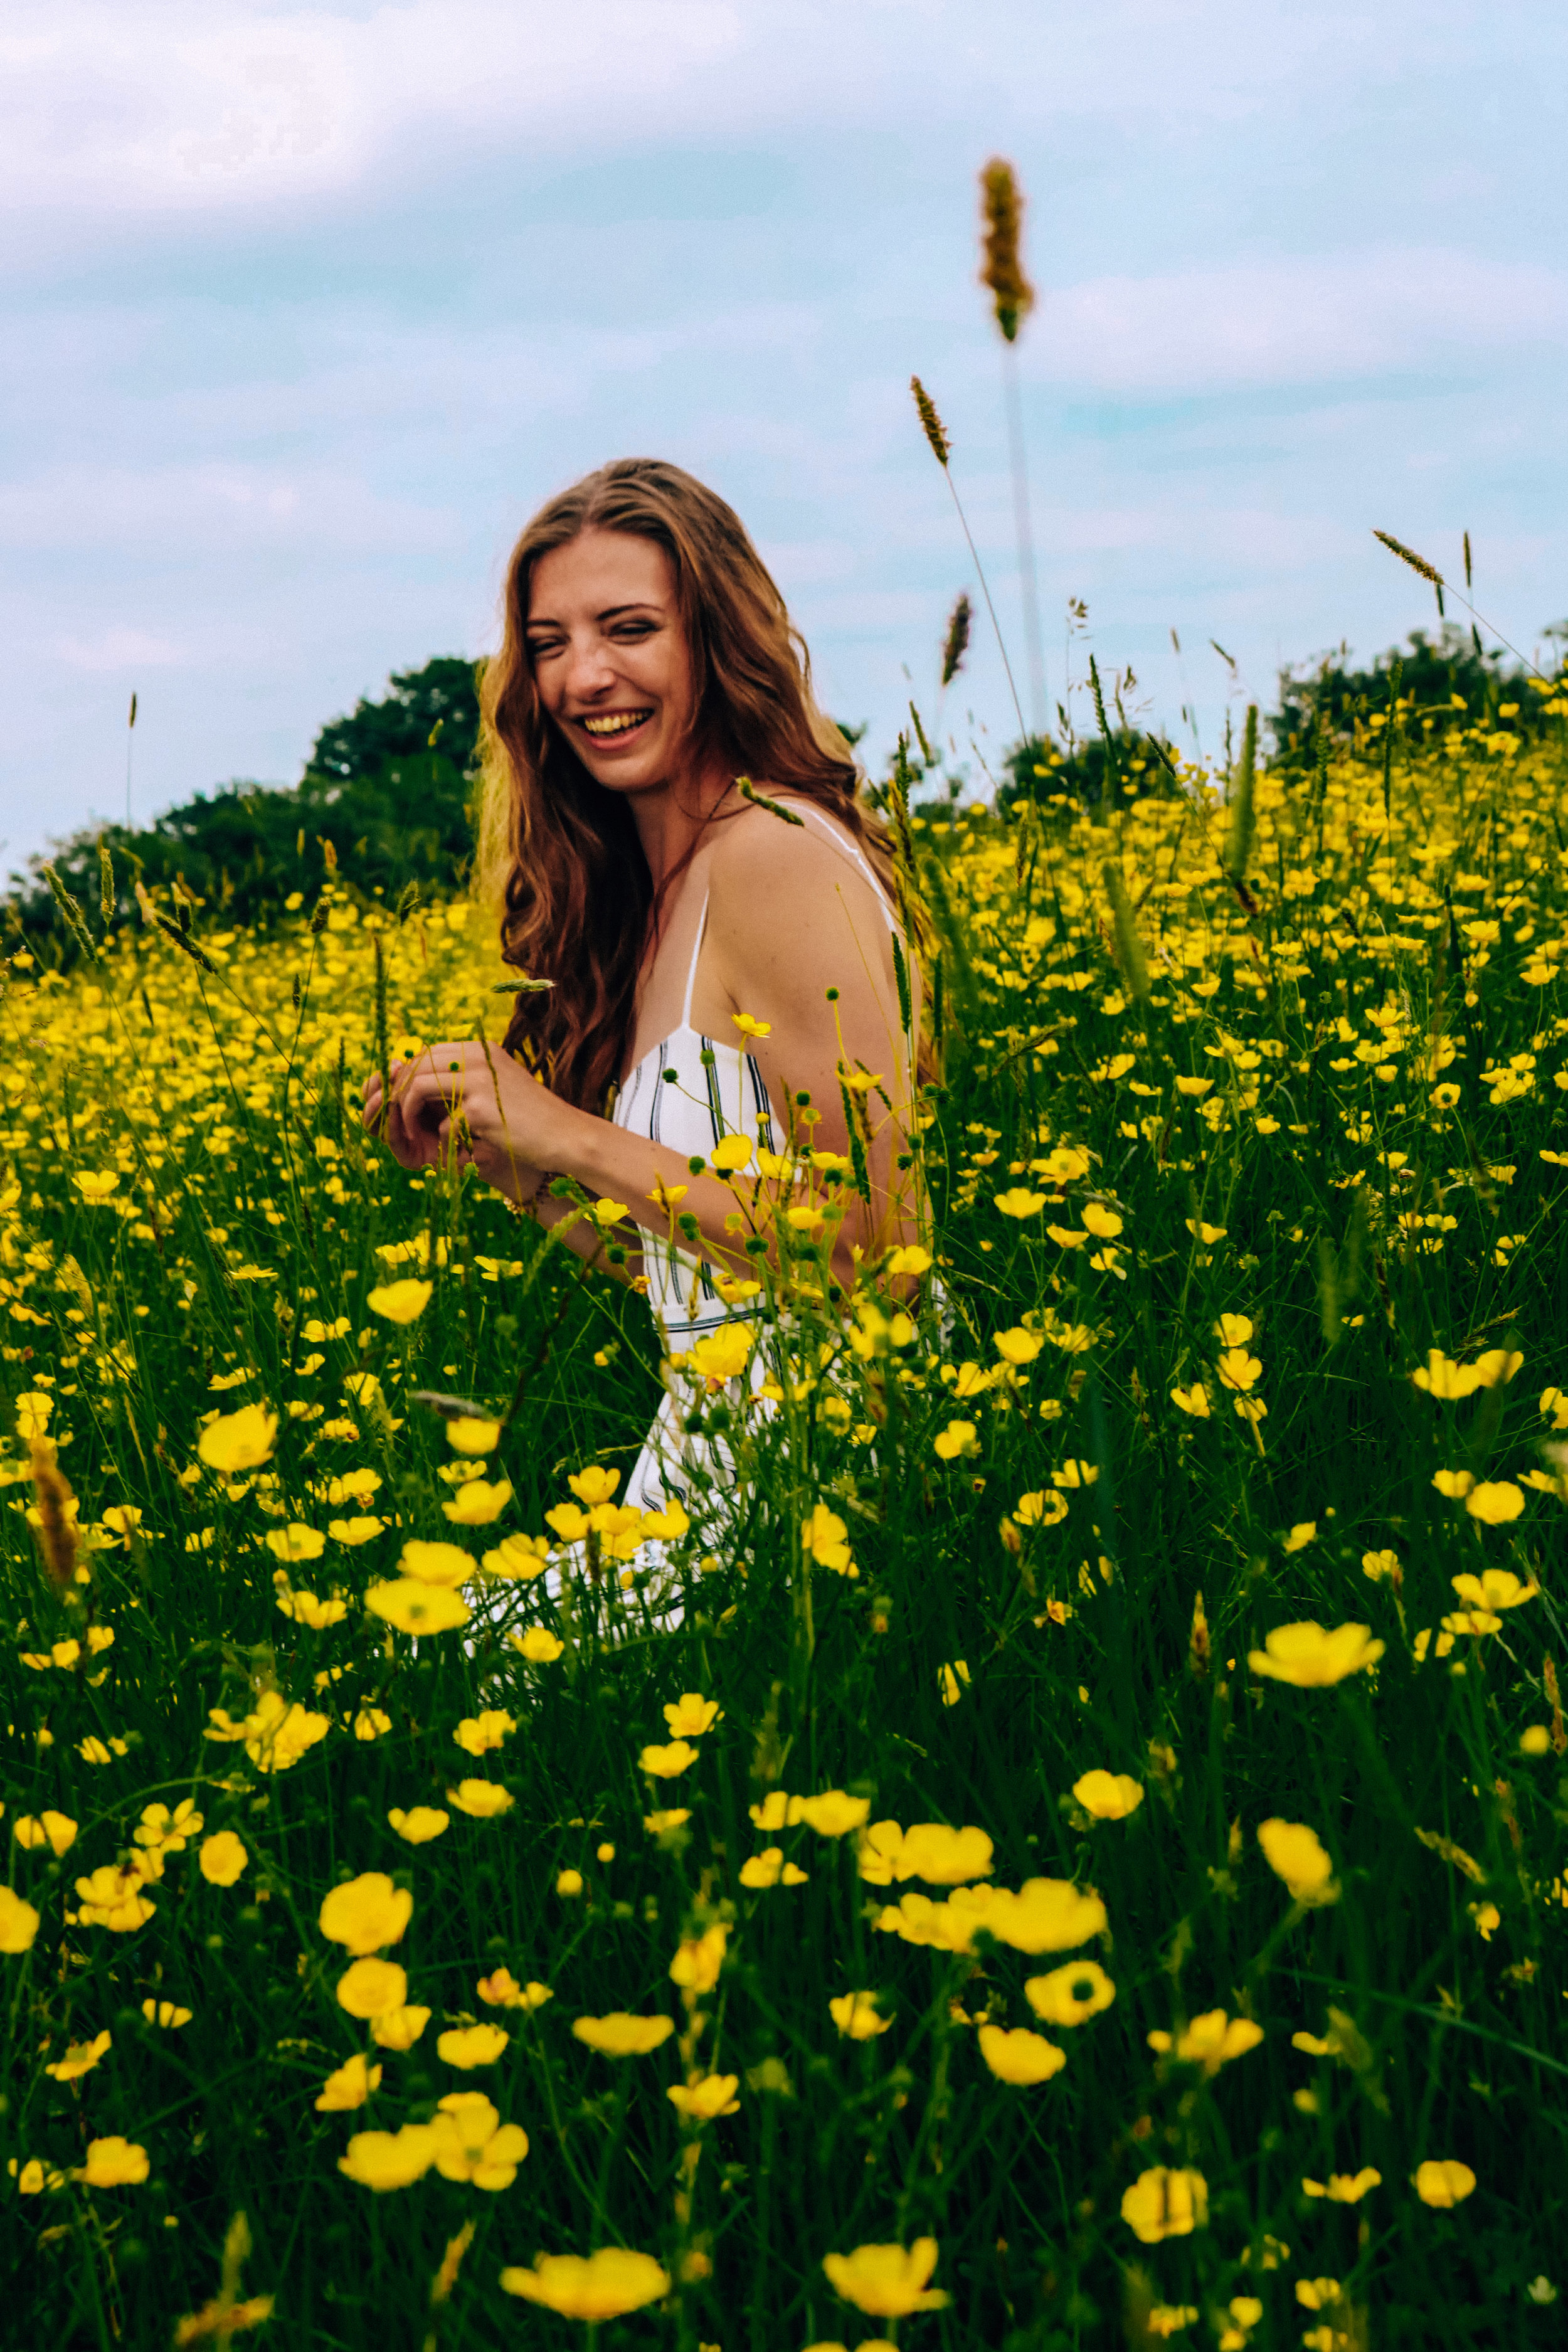 Sitting in a field of buttercup flowers